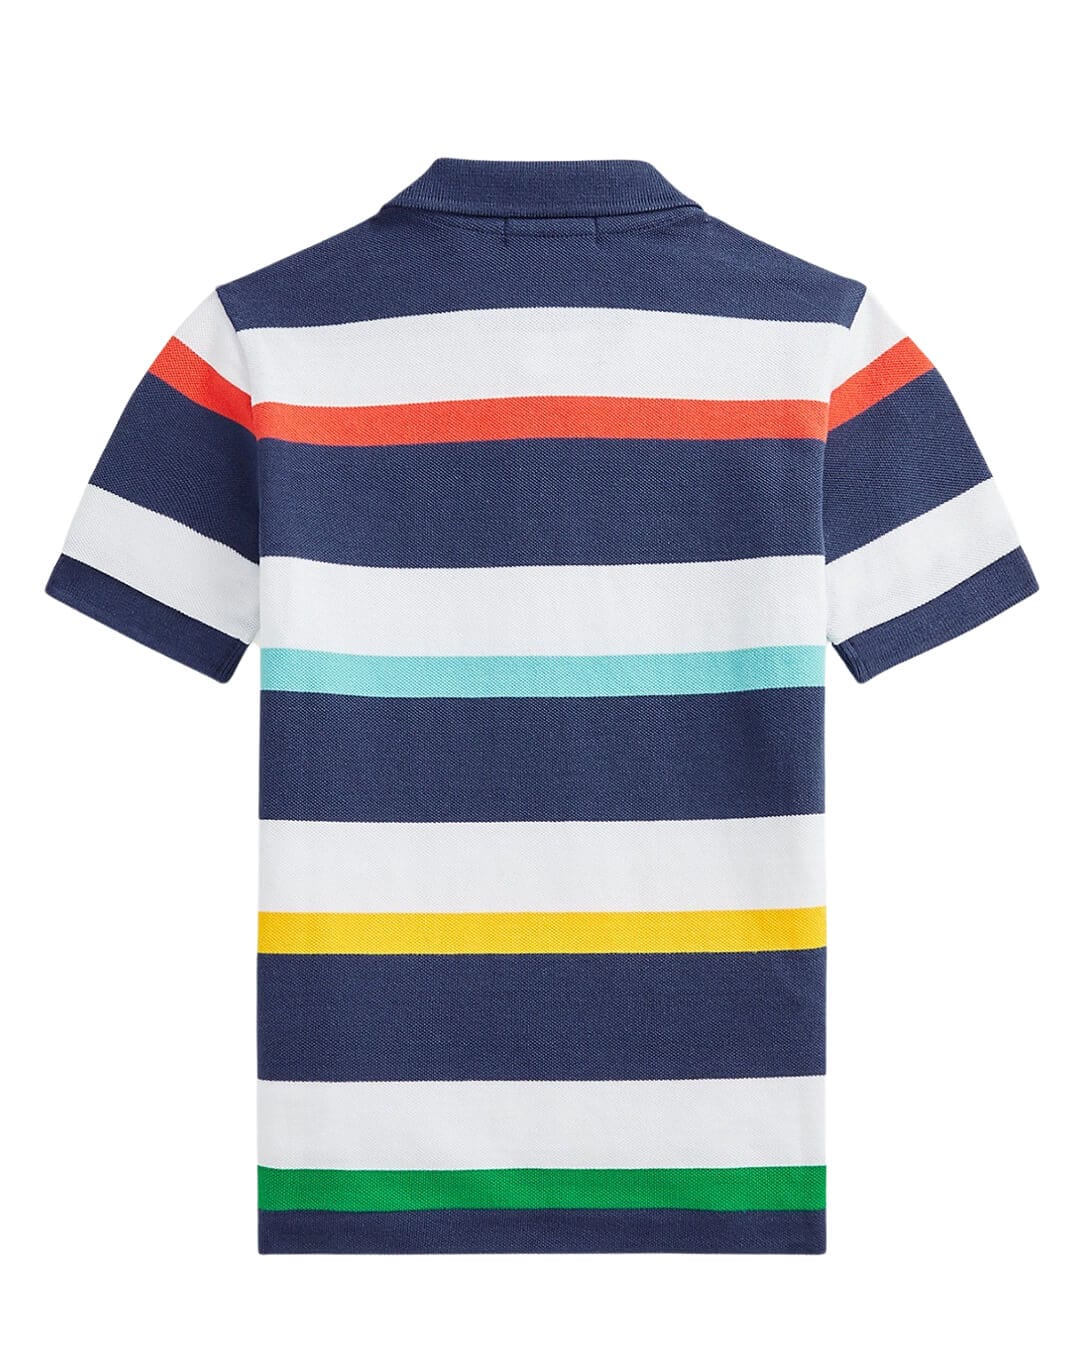 Polo Ralph Lauren Polo Shirts Boys Polo Ralph Lauren White And Multicoloured Striped Polo Shirt